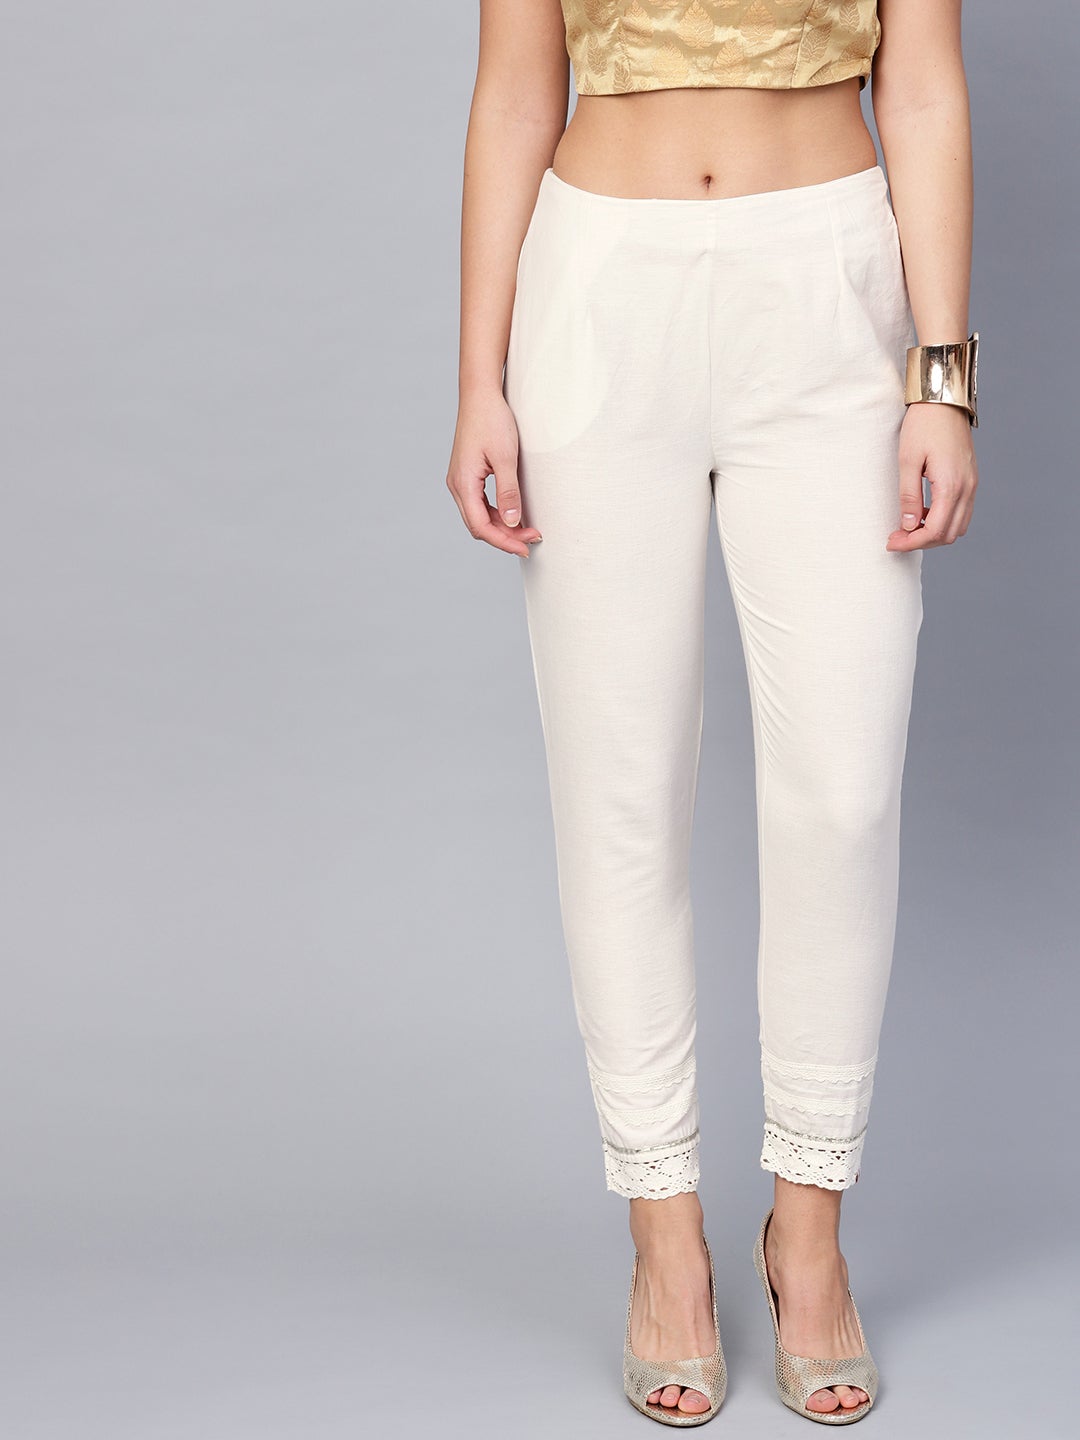 Juniper White Solid Cotton Flex Slim Fit Women Pants With One Pocket